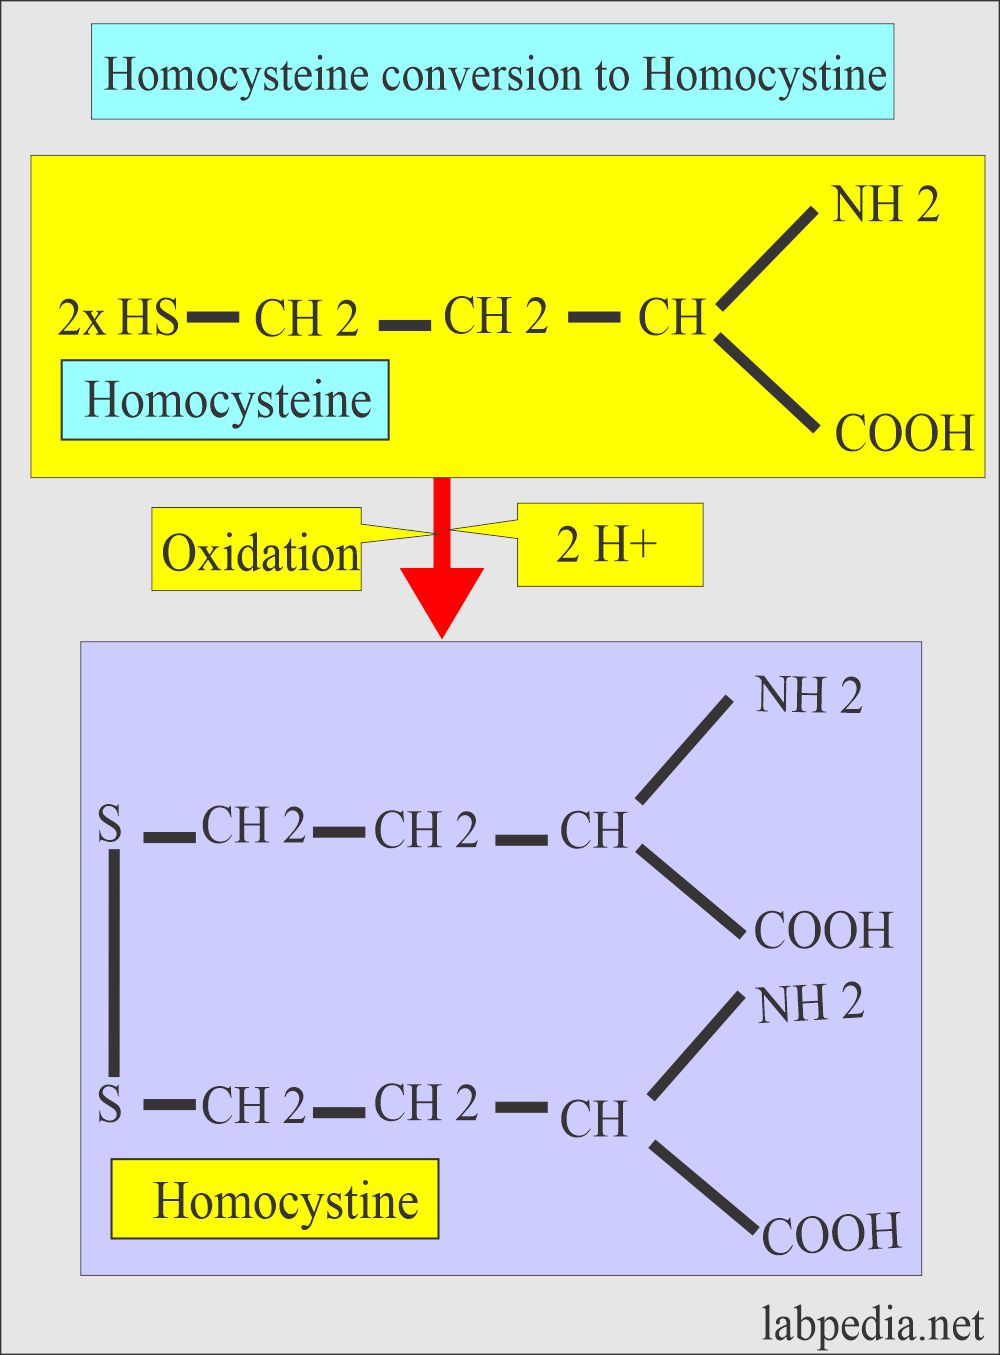 Homocysteine (Homocysteinemia): Homocysteine conversion to Homocystine